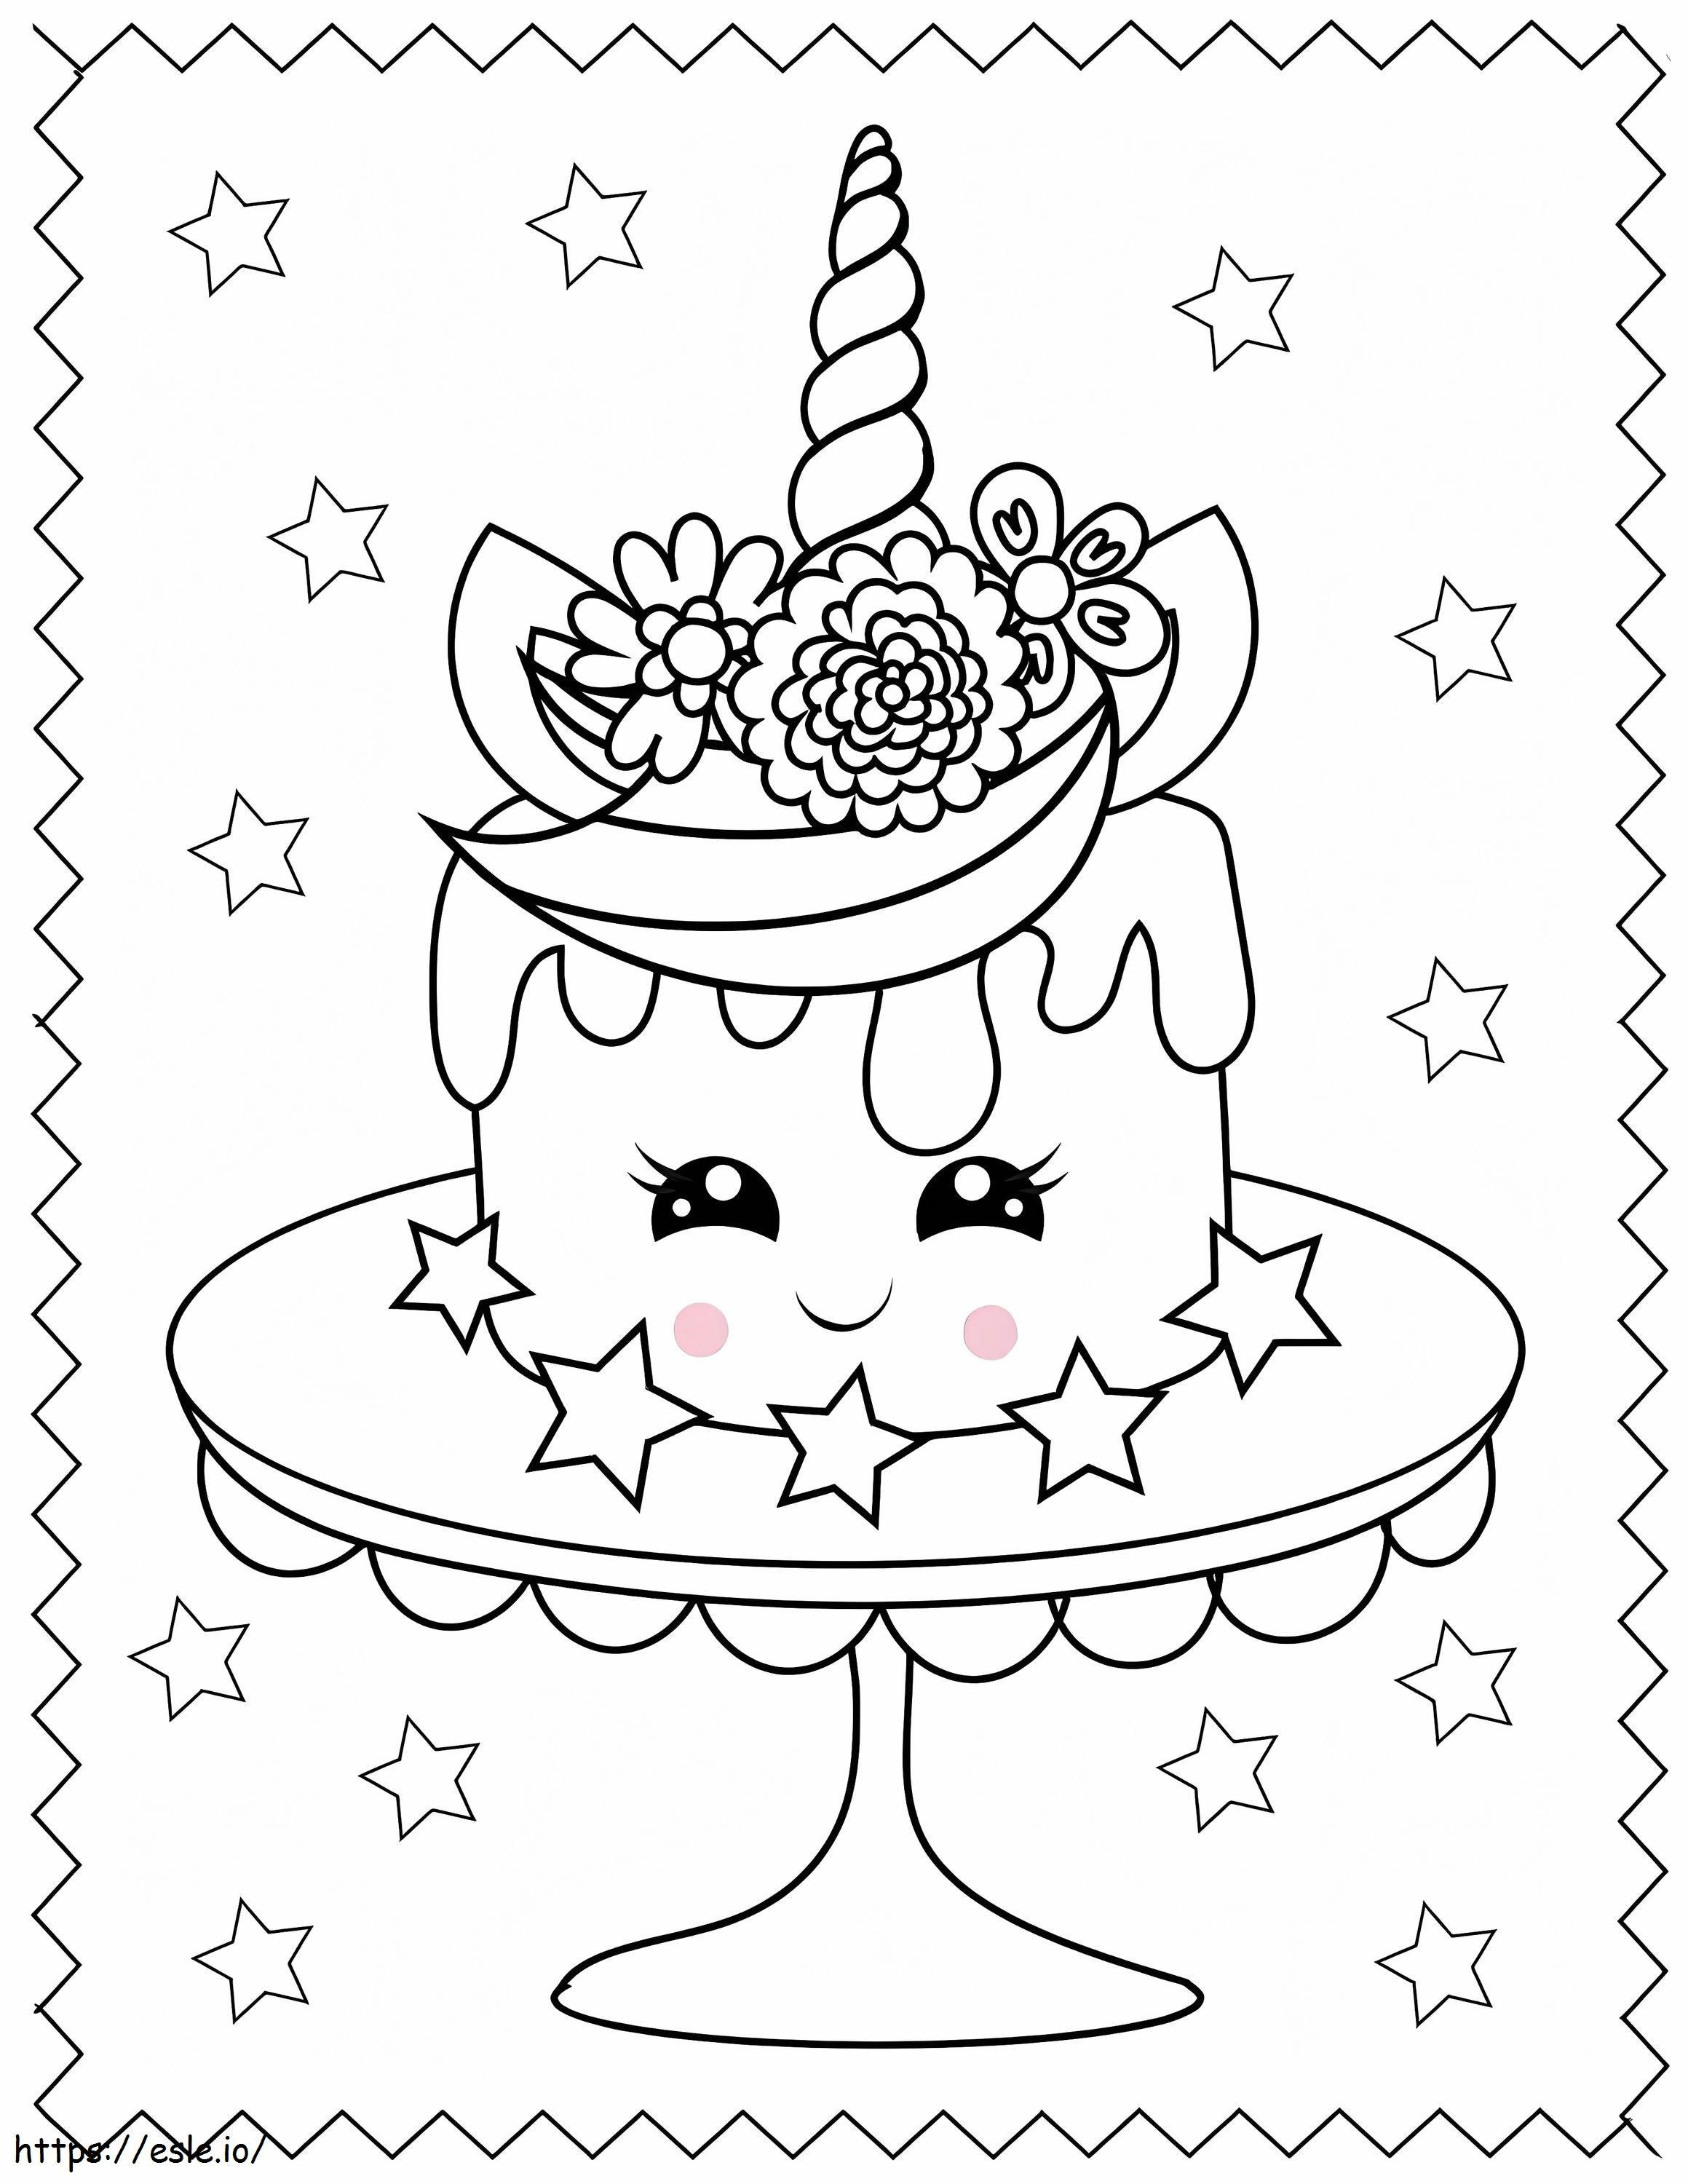 Super Sweet Dessert Unicorn coloring page